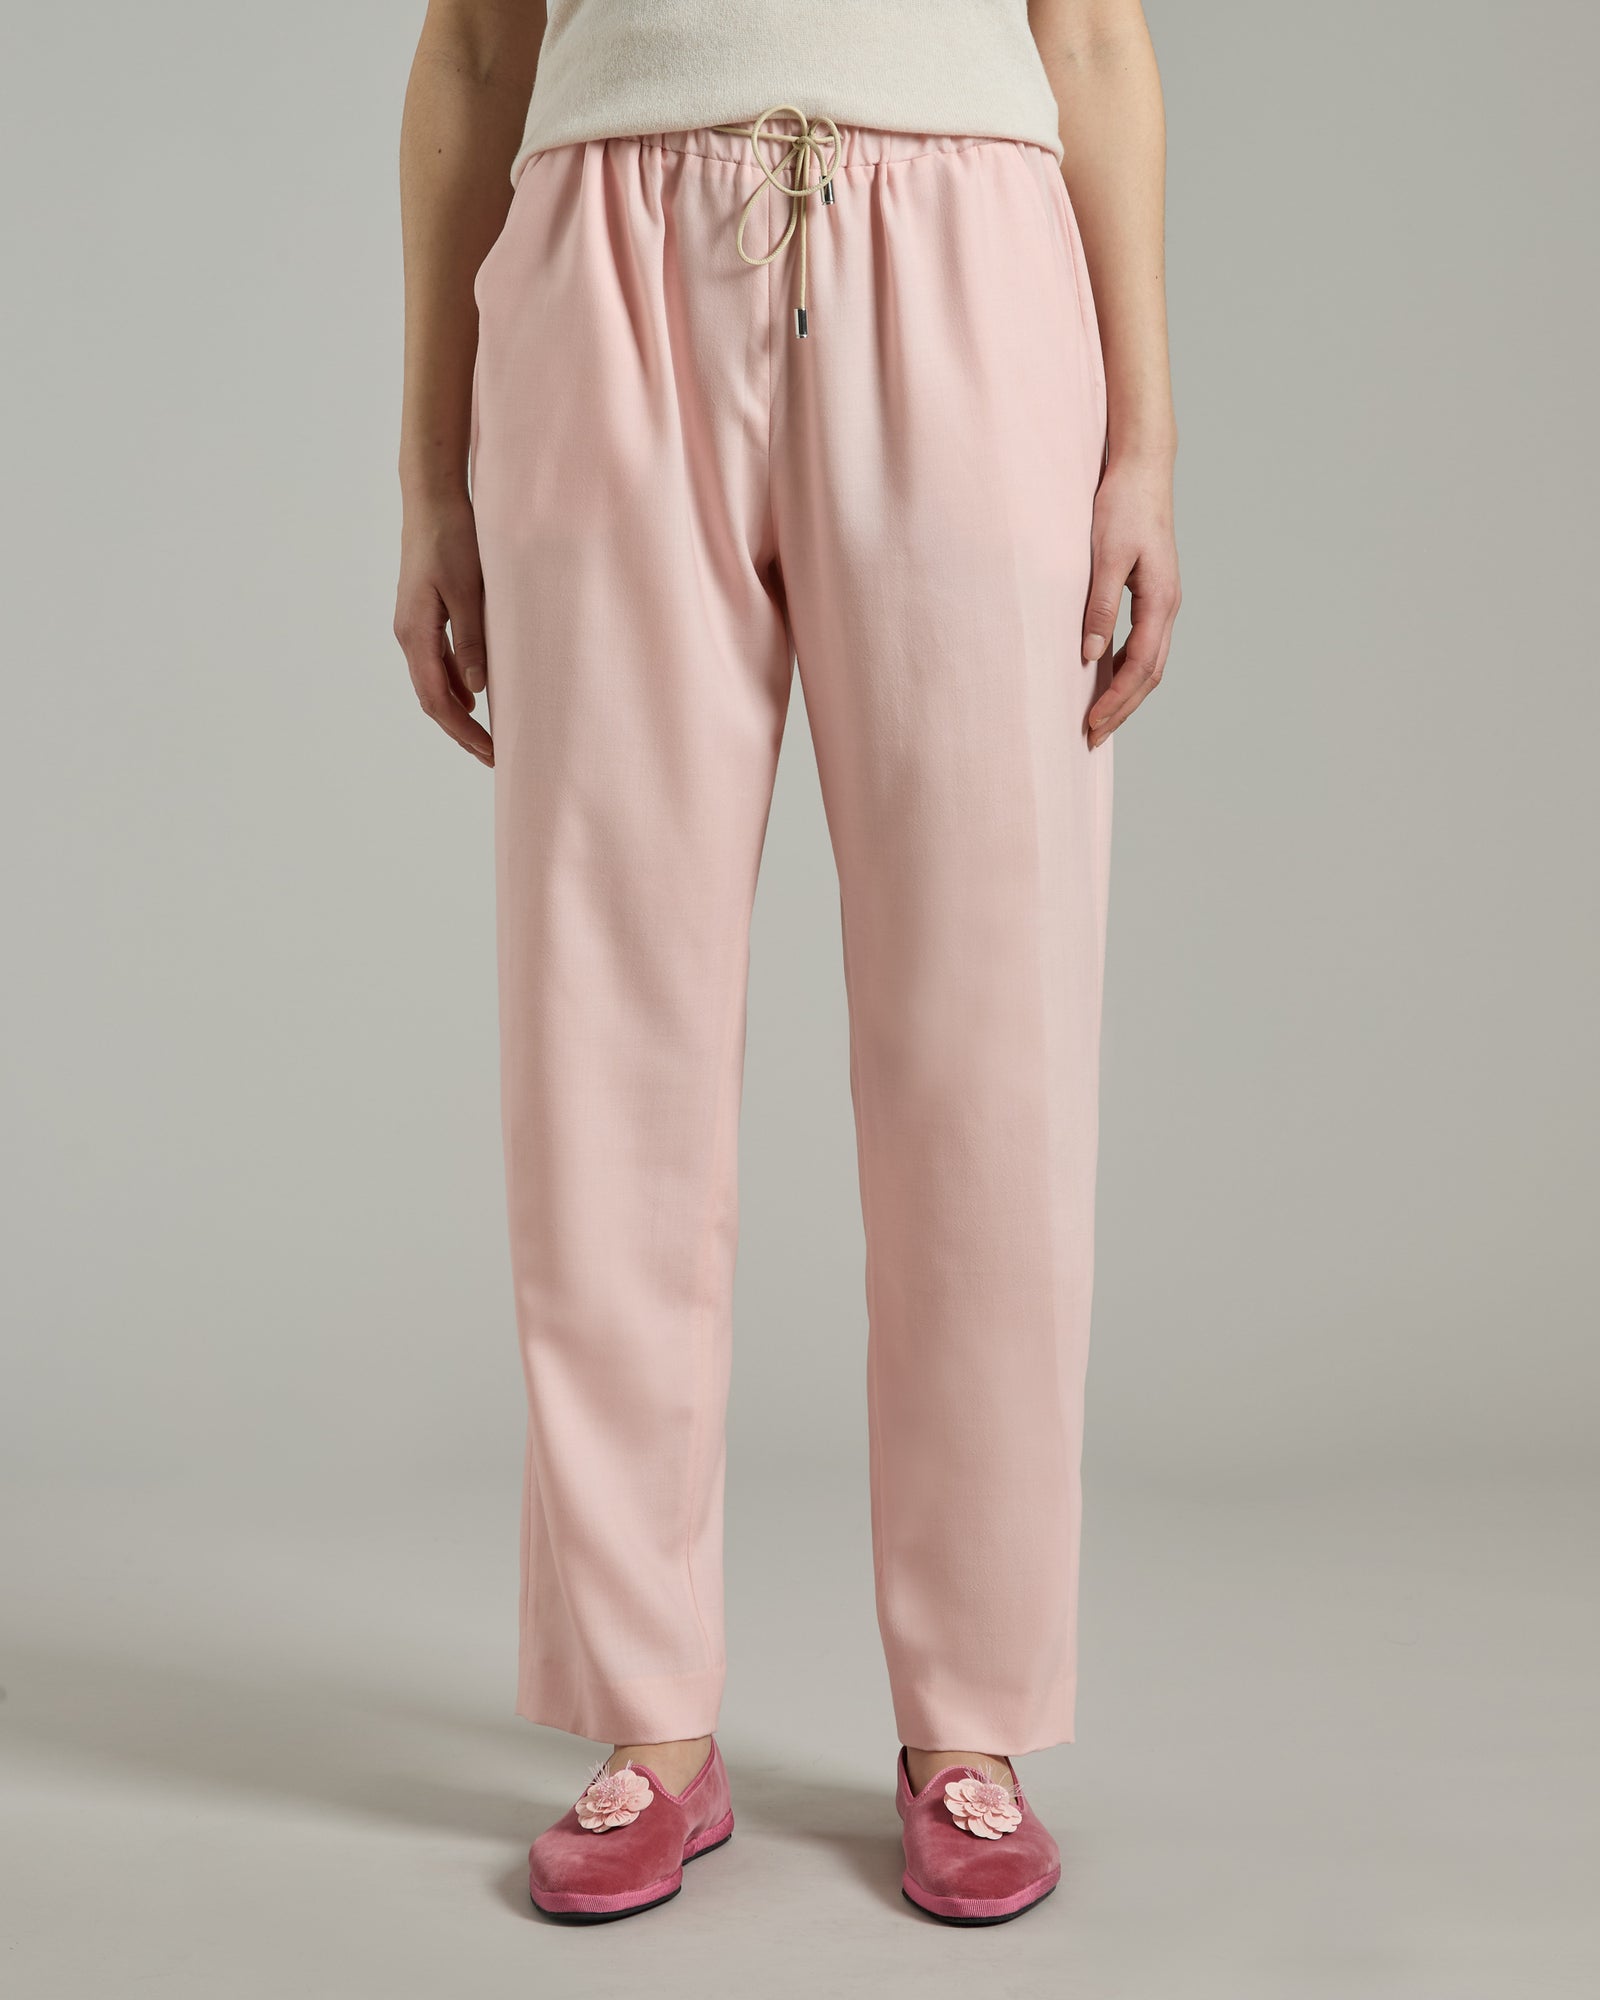 Pantalone in Cashmere 4.0 rosa